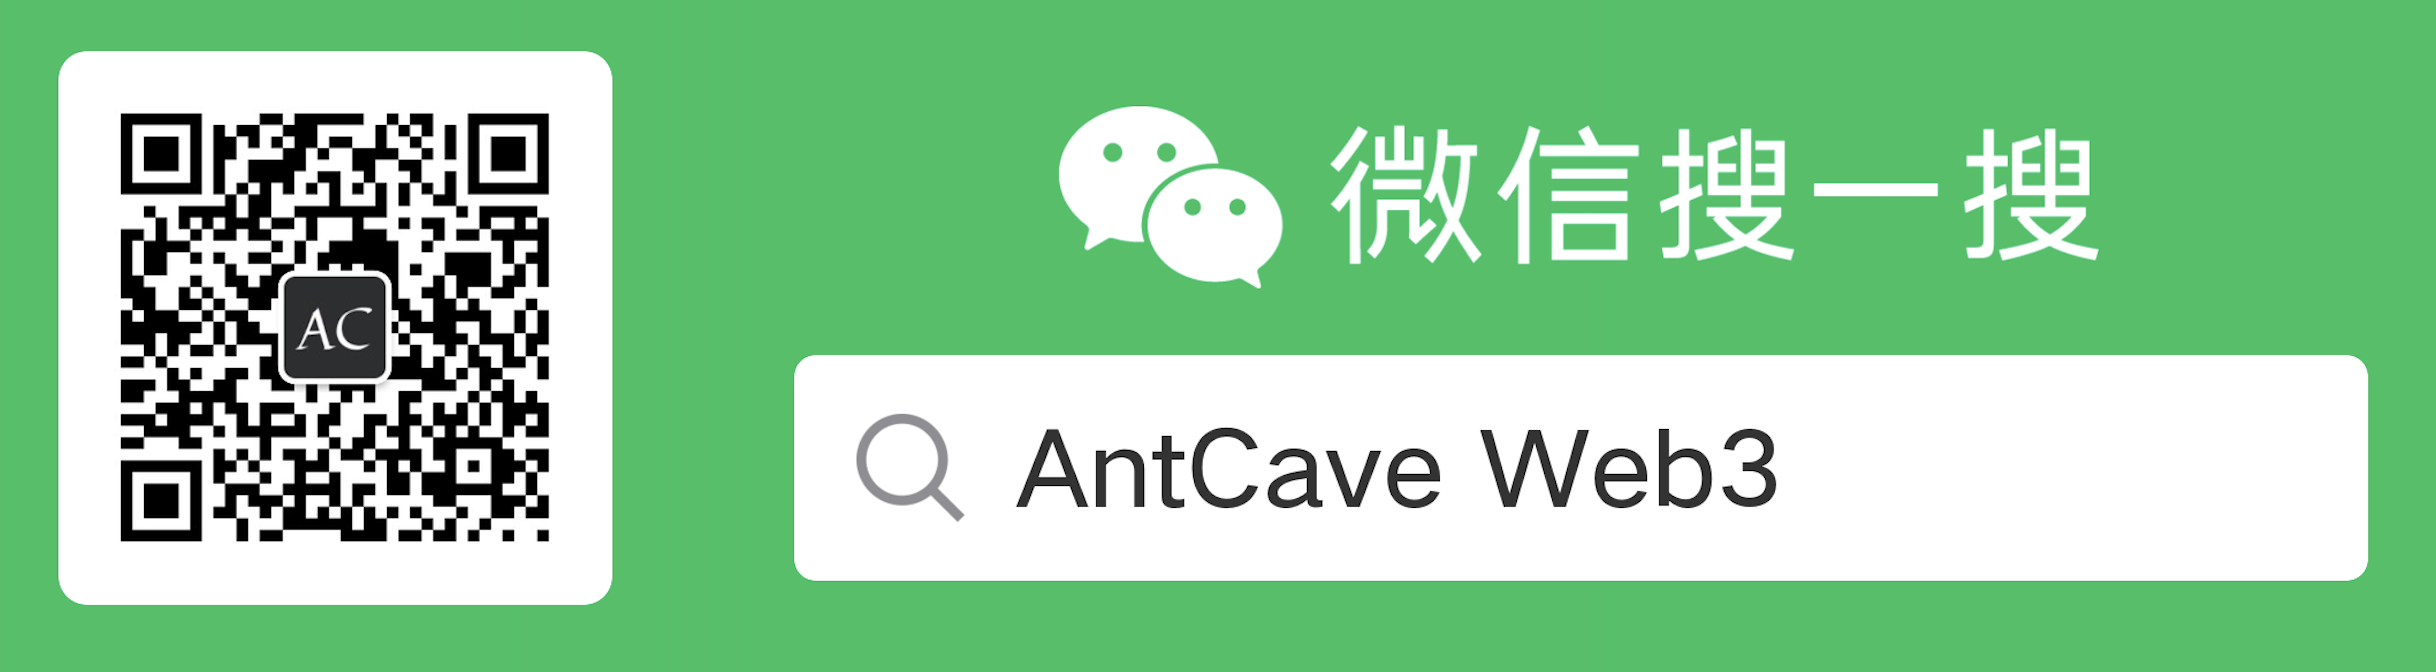 AntCave Web3